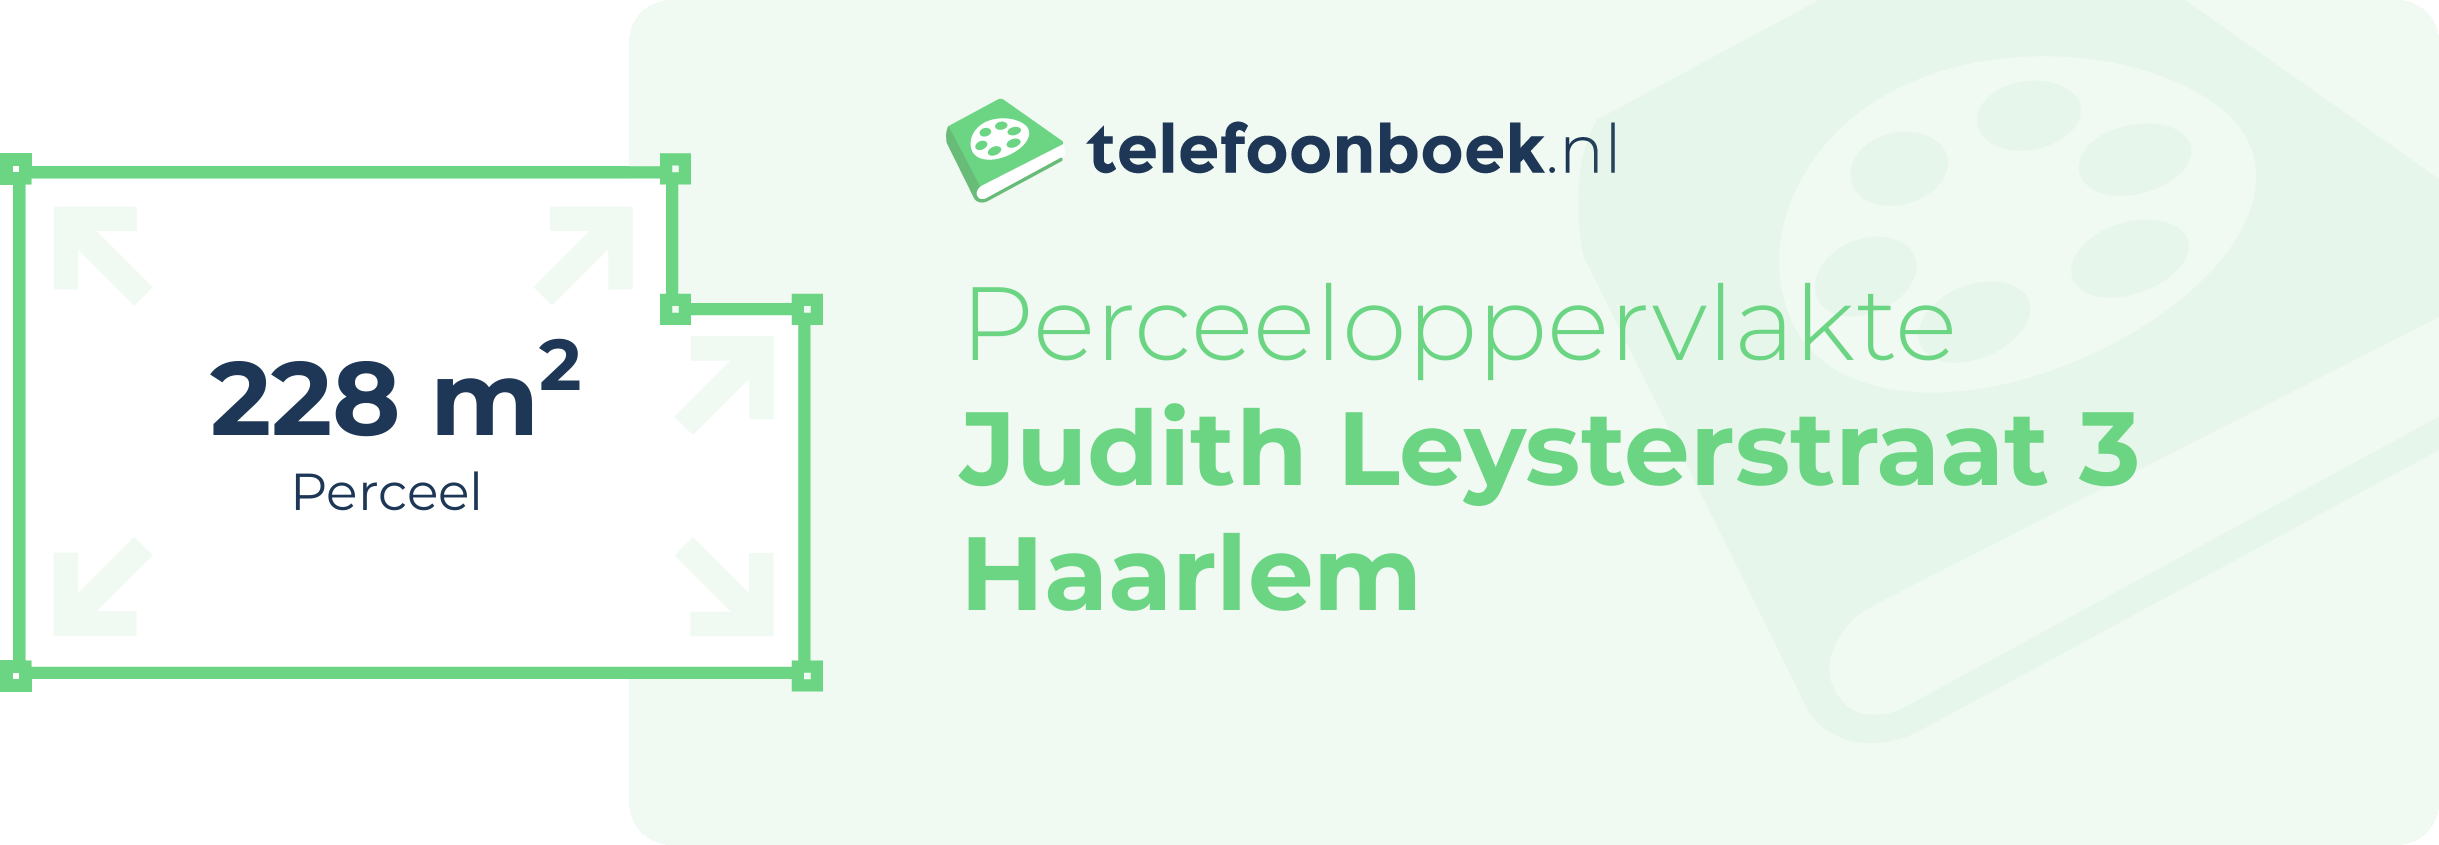 Perceeloppervlakte Judith Leysterstraat 3 Haarlem